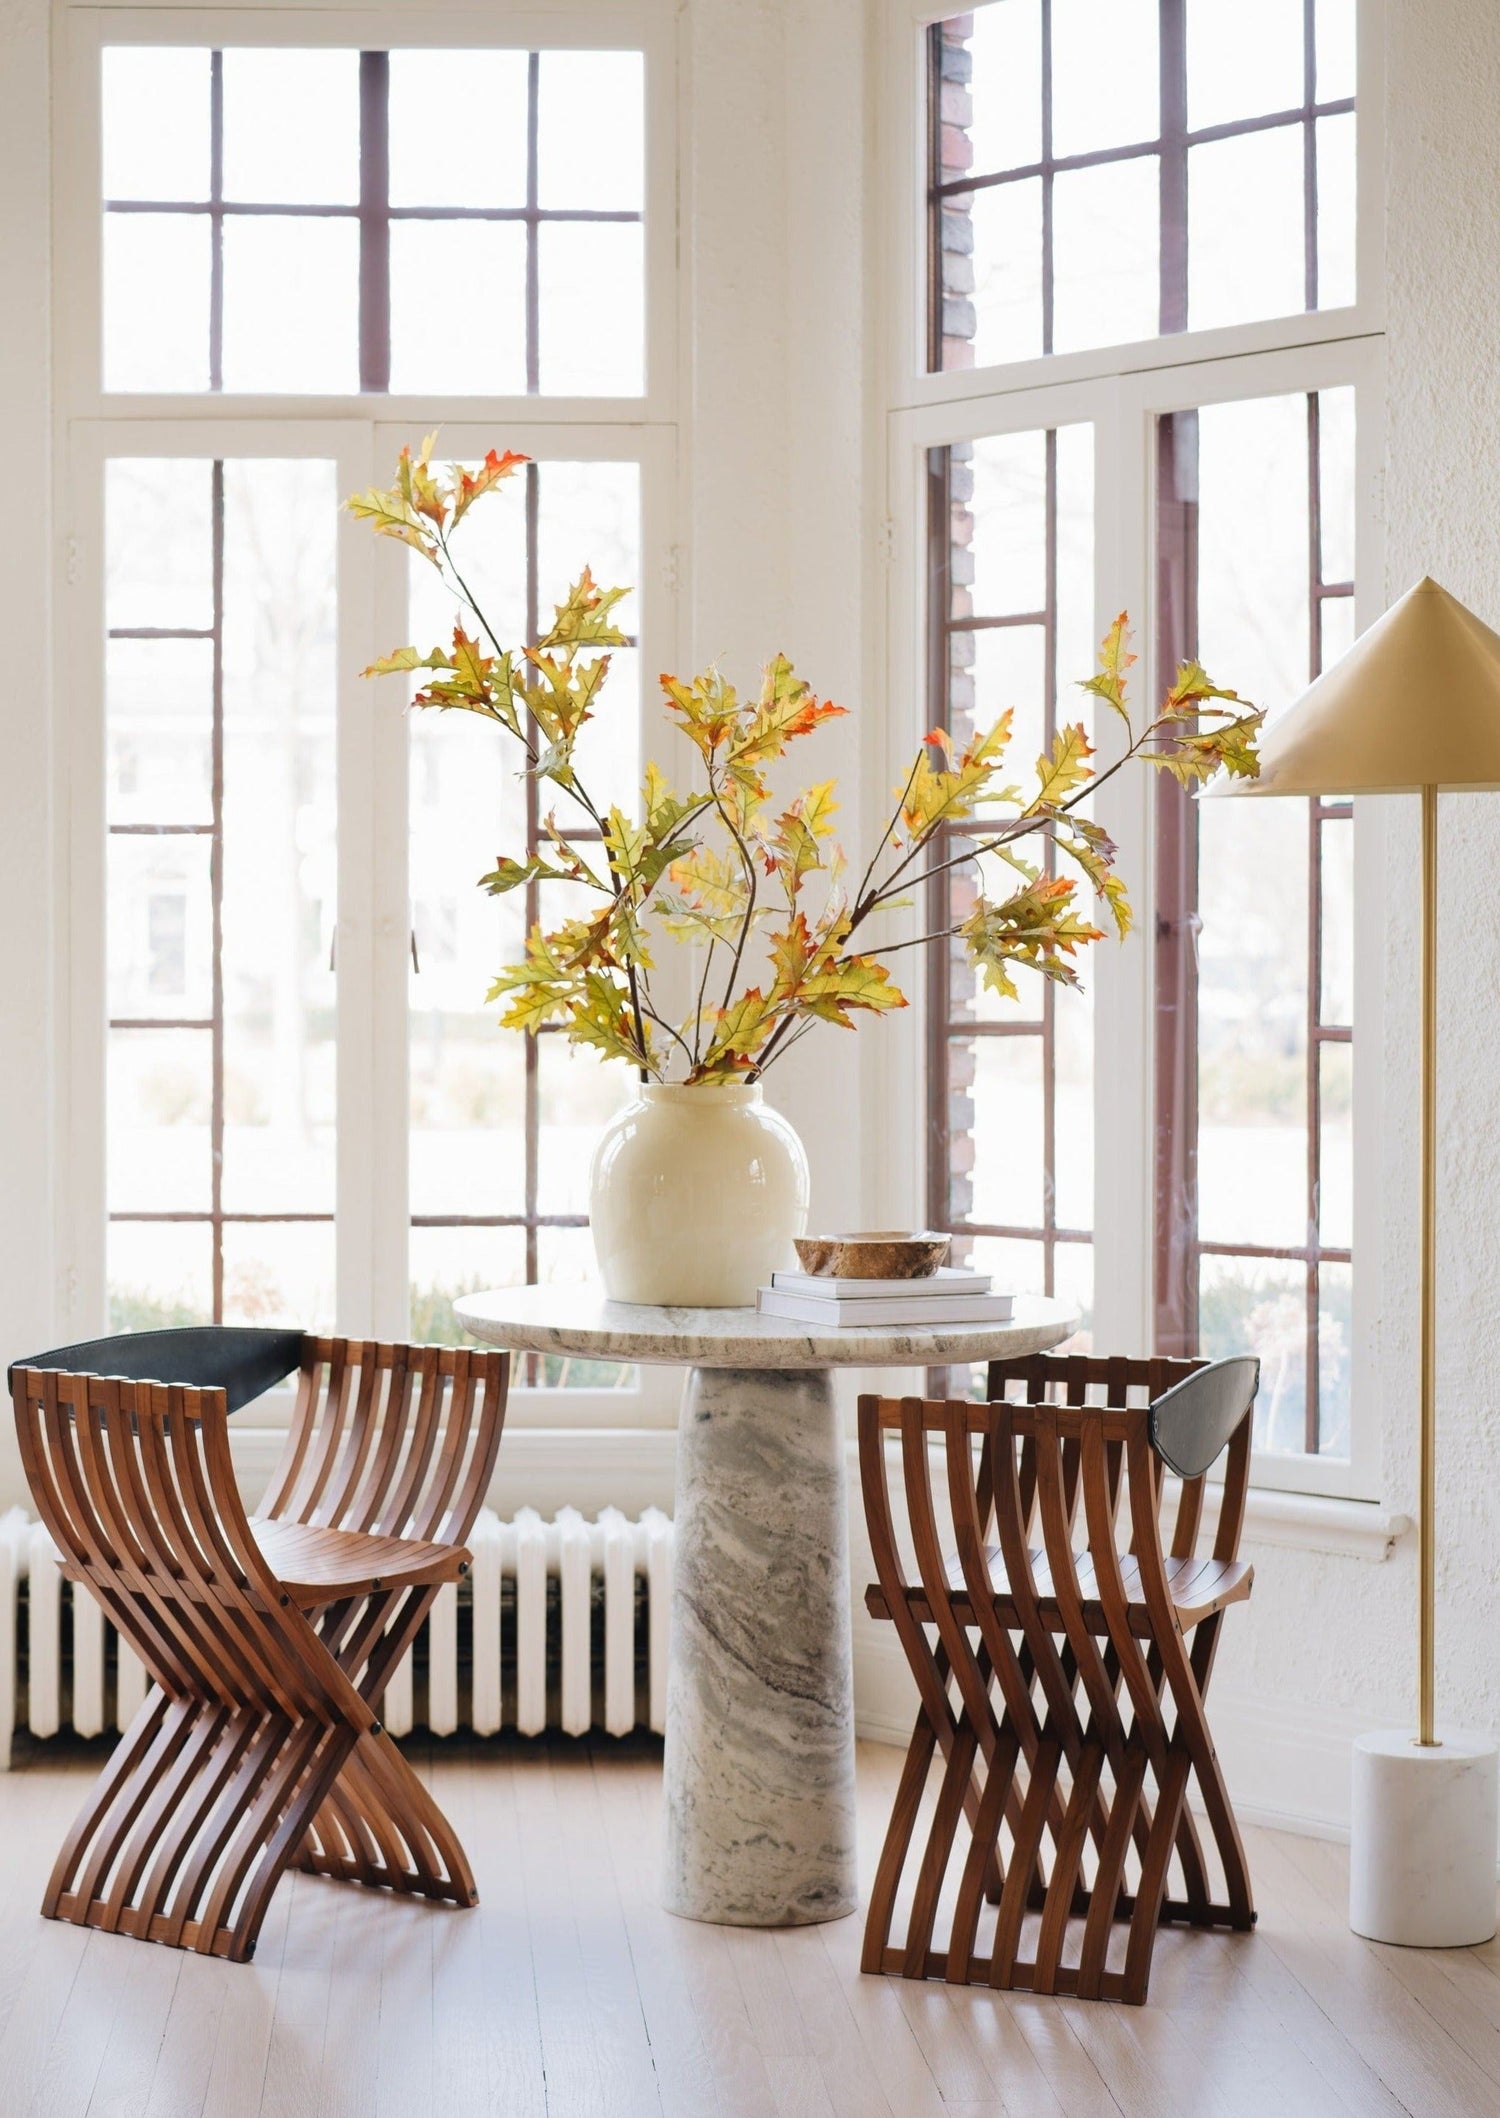 Artificial Oak Leaf Branch Styled in Vase on Side Table